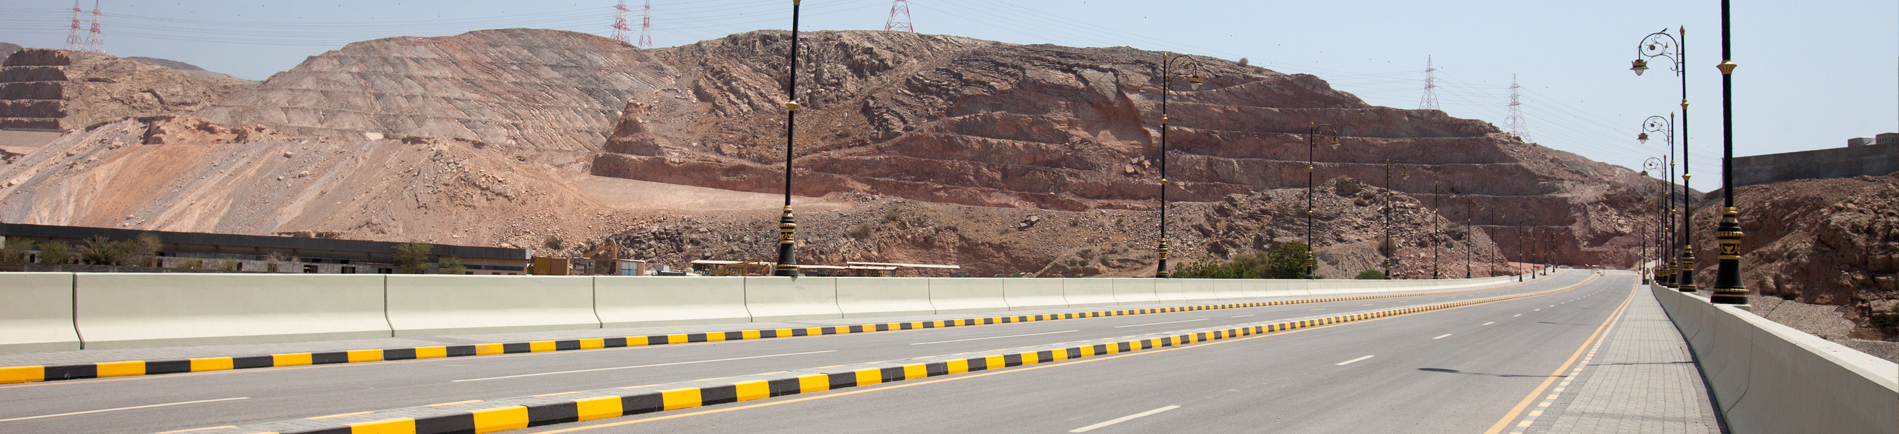 Design and Construction of Wadi Bridges and Culverts in Al Qurm